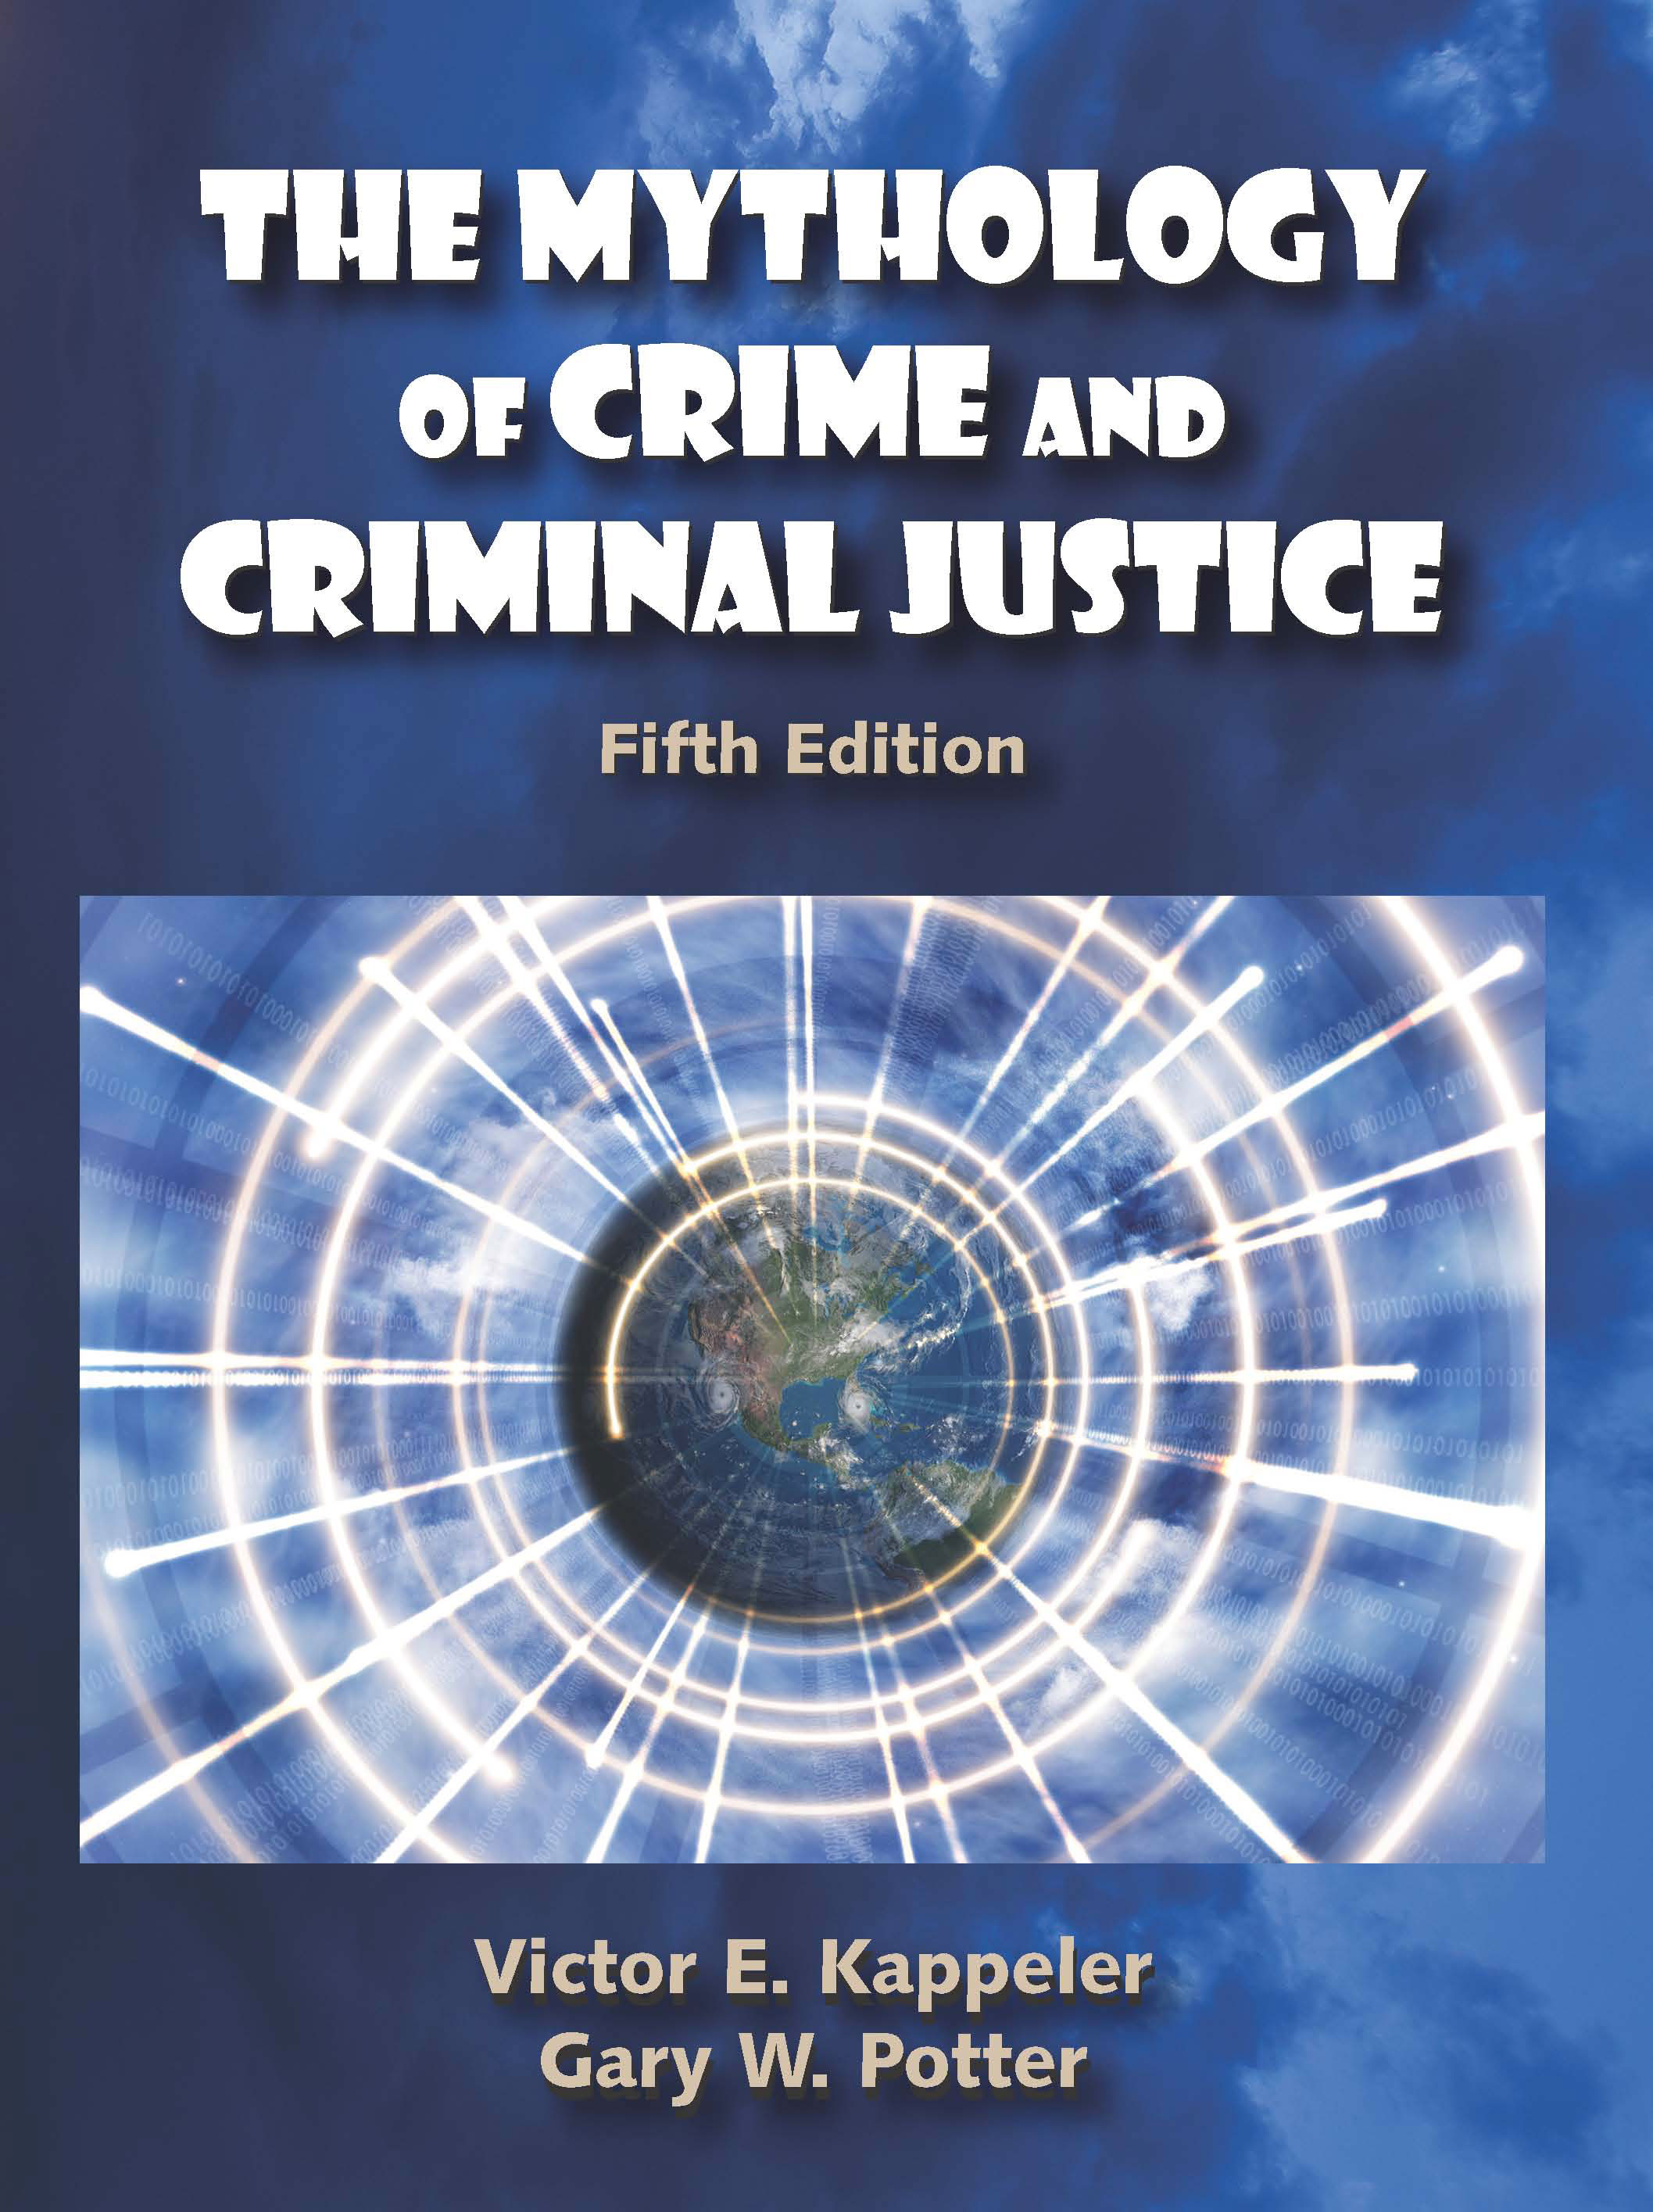 The Mythology of Crime and Criminal Justice:  by Victor E. Kappeler, Gary W. Potter